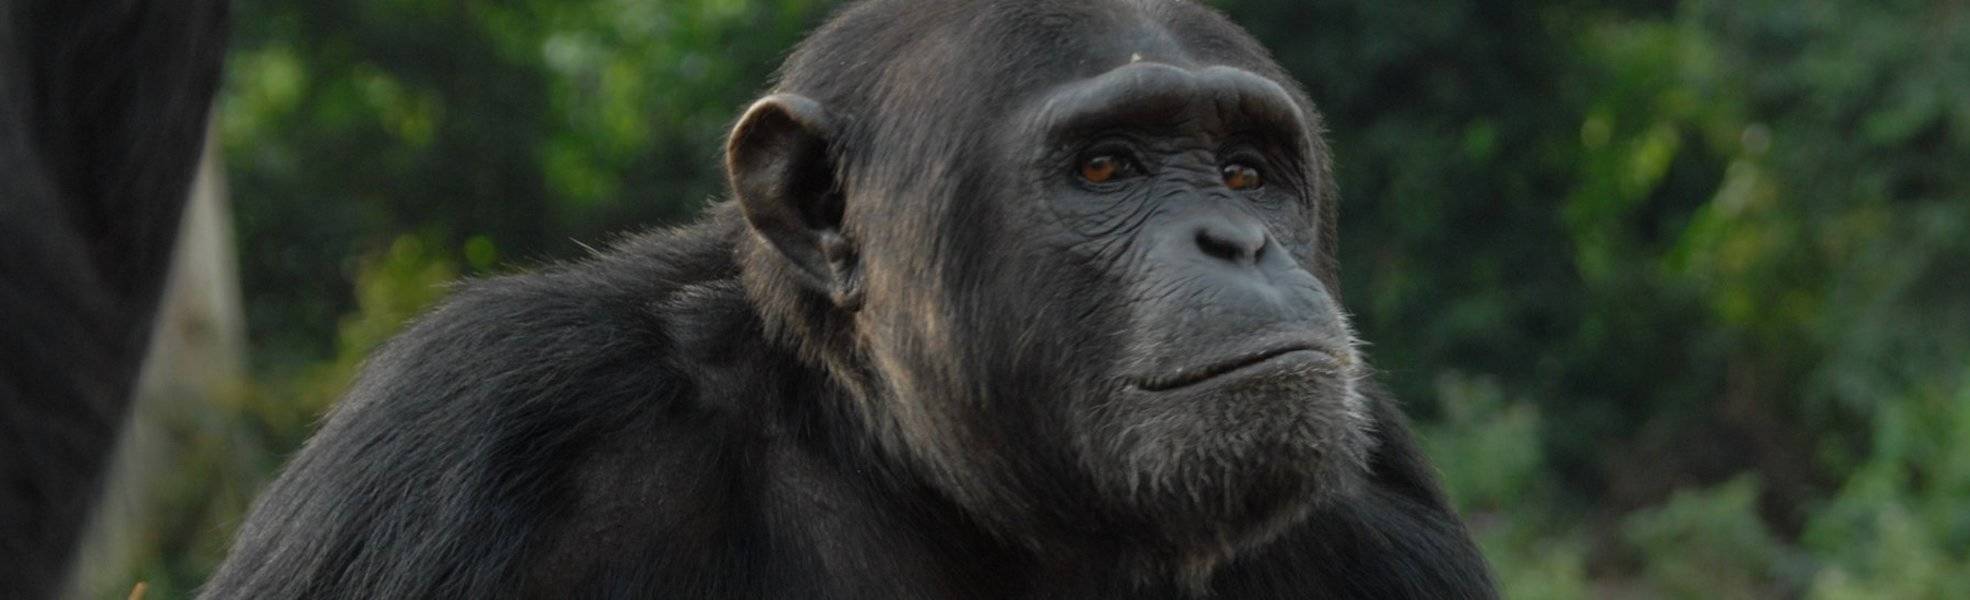 Volunteering with chimpanzees in Uganda